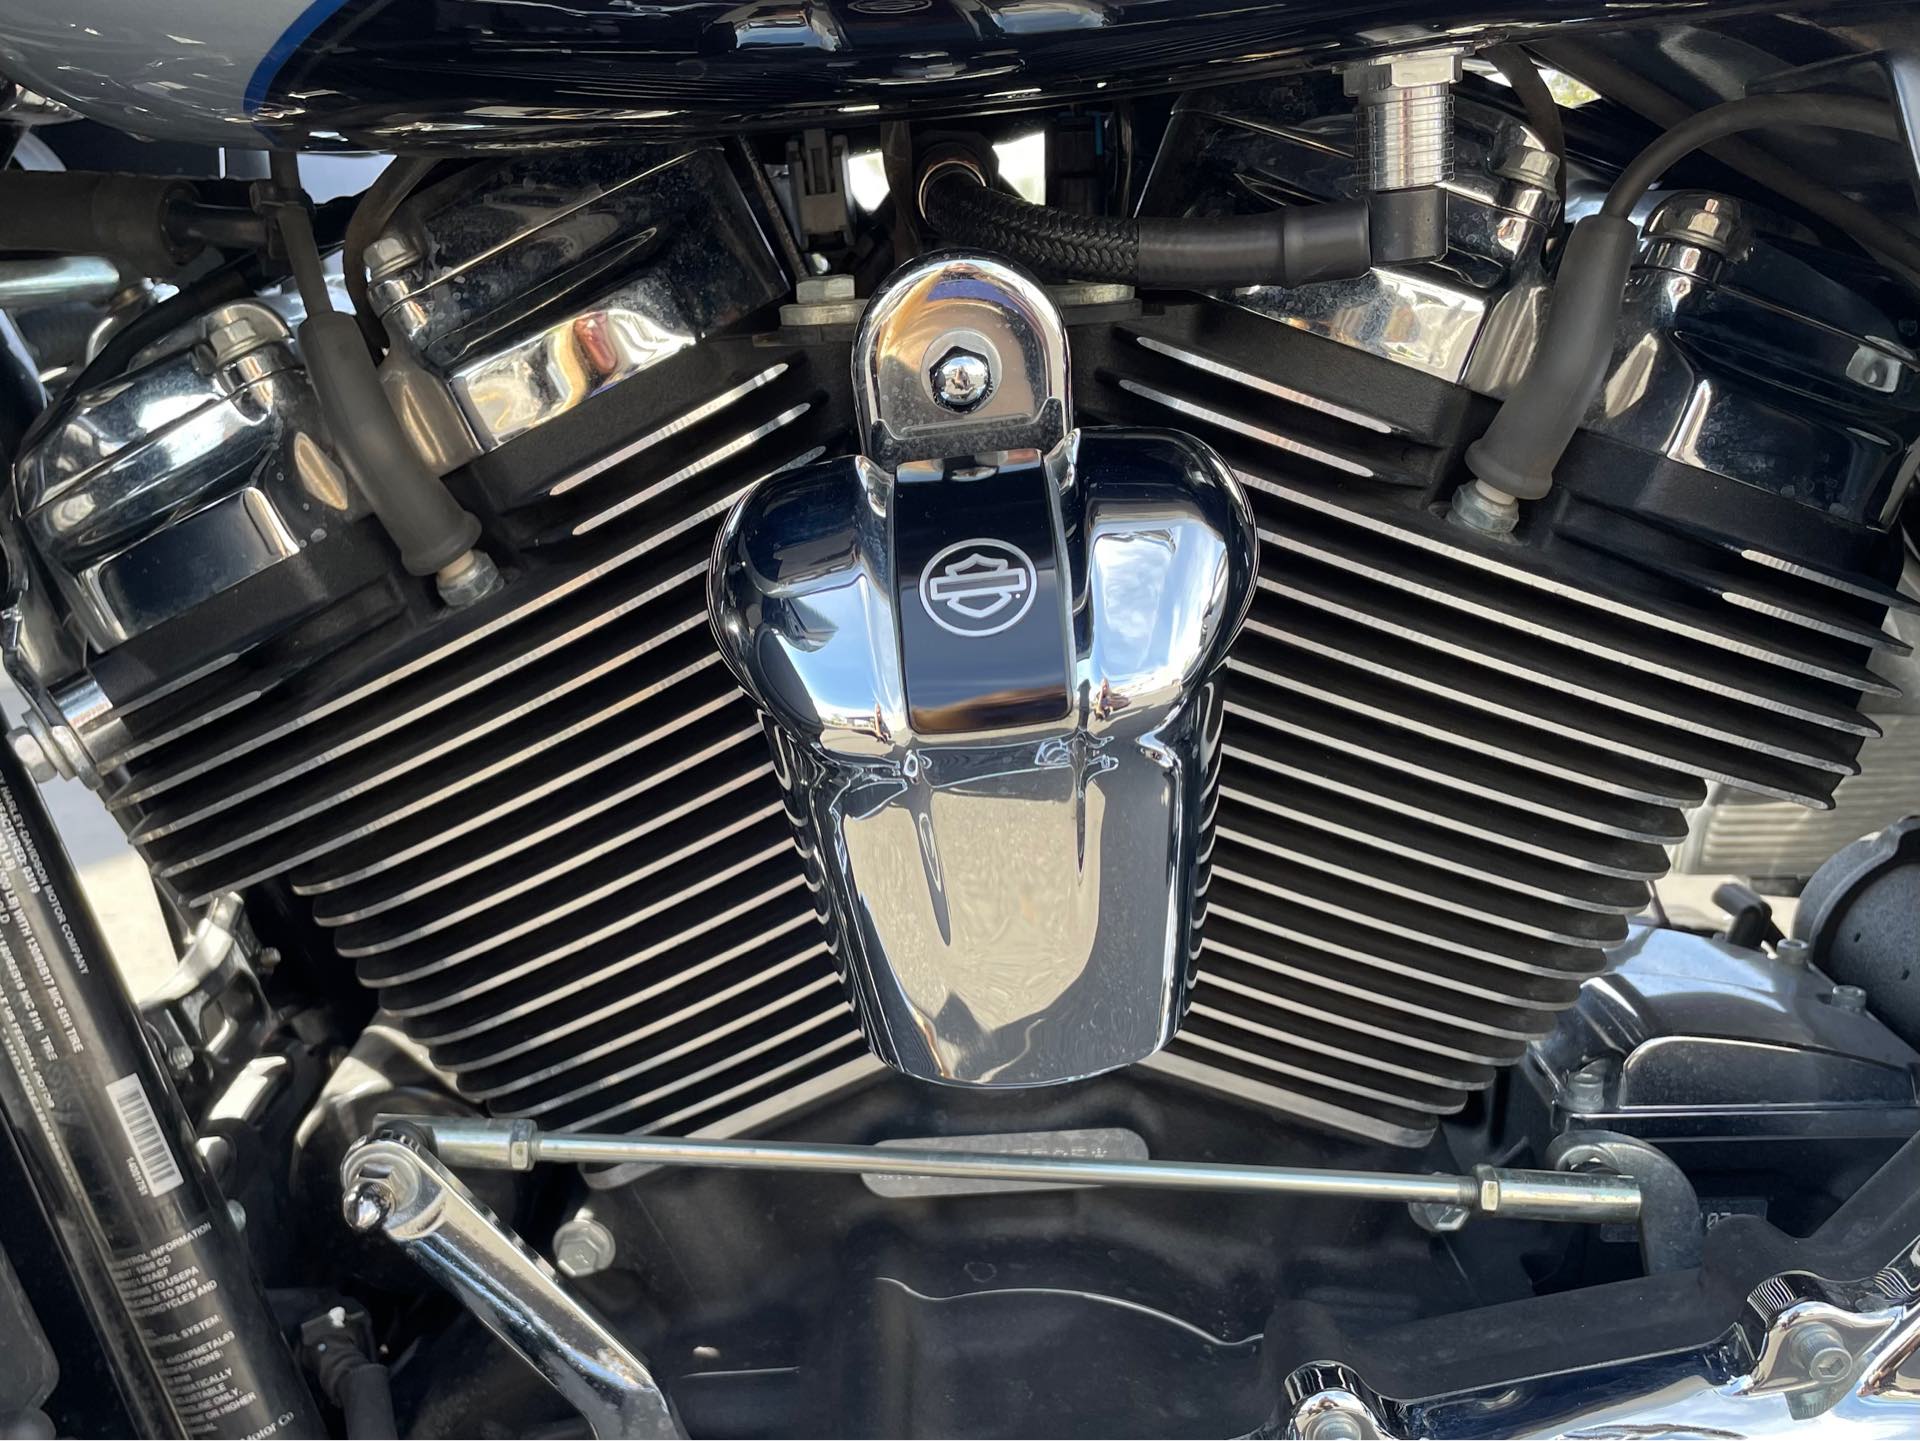 2019 Harley-Davidson Road Glide Ultra at Buddy Stubbs Arizona Harley-Davidson